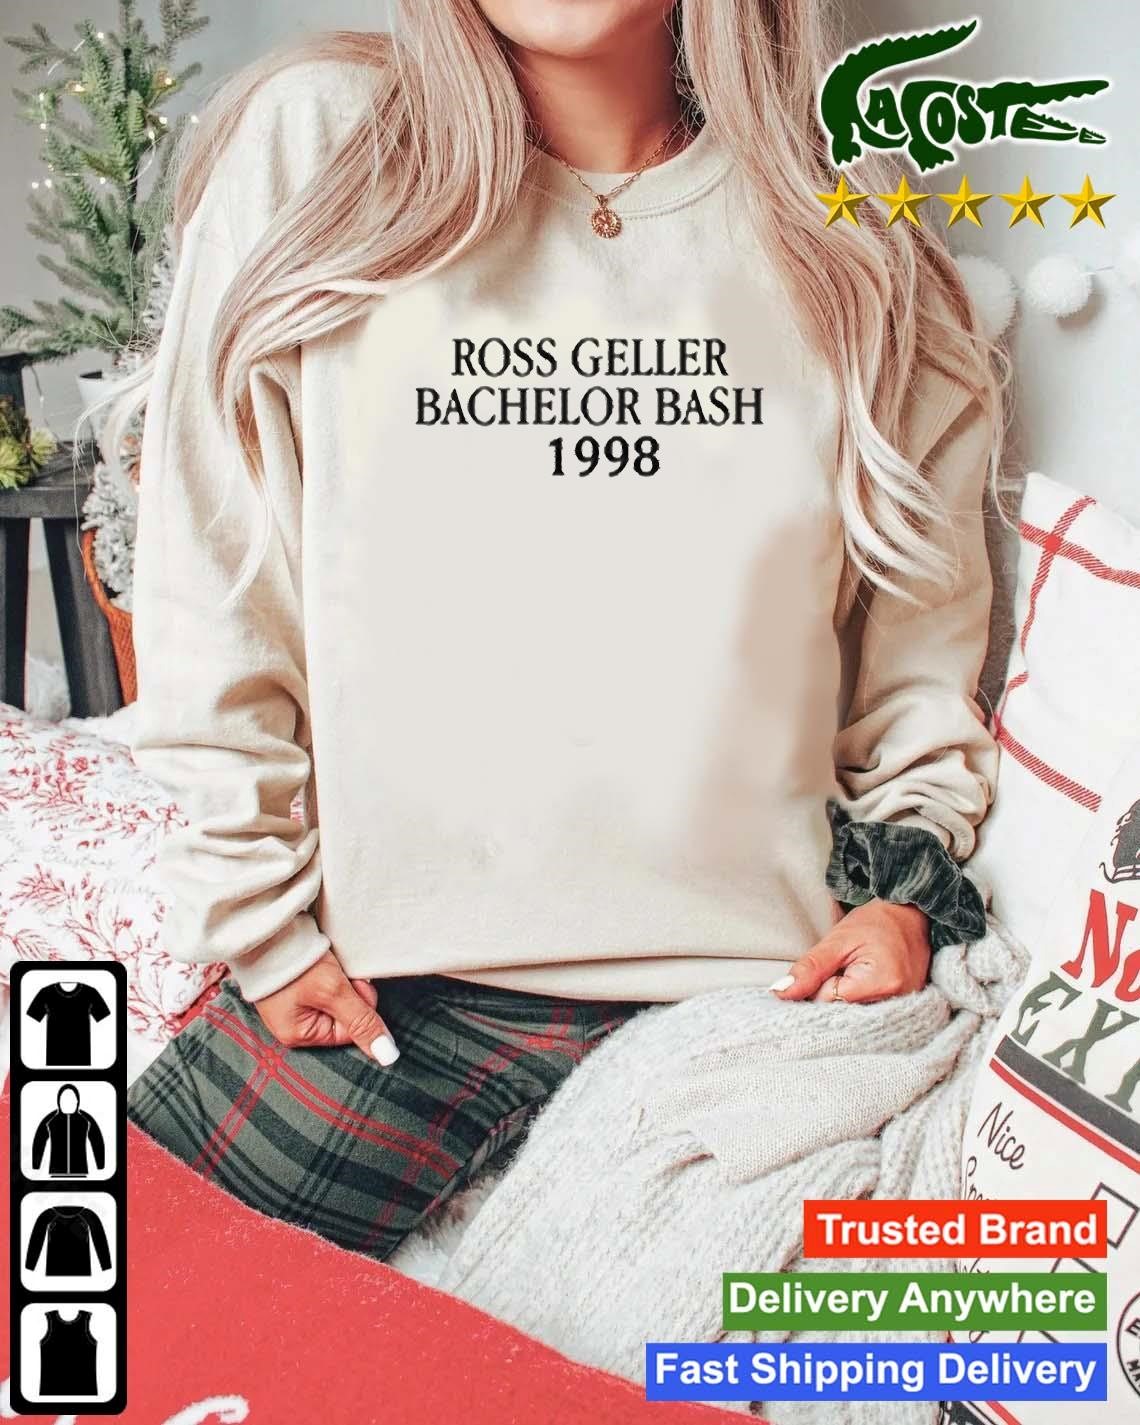 Ross Geller Bachelor Bash 1998 Sweatshirt Mockup Sweater.jpg